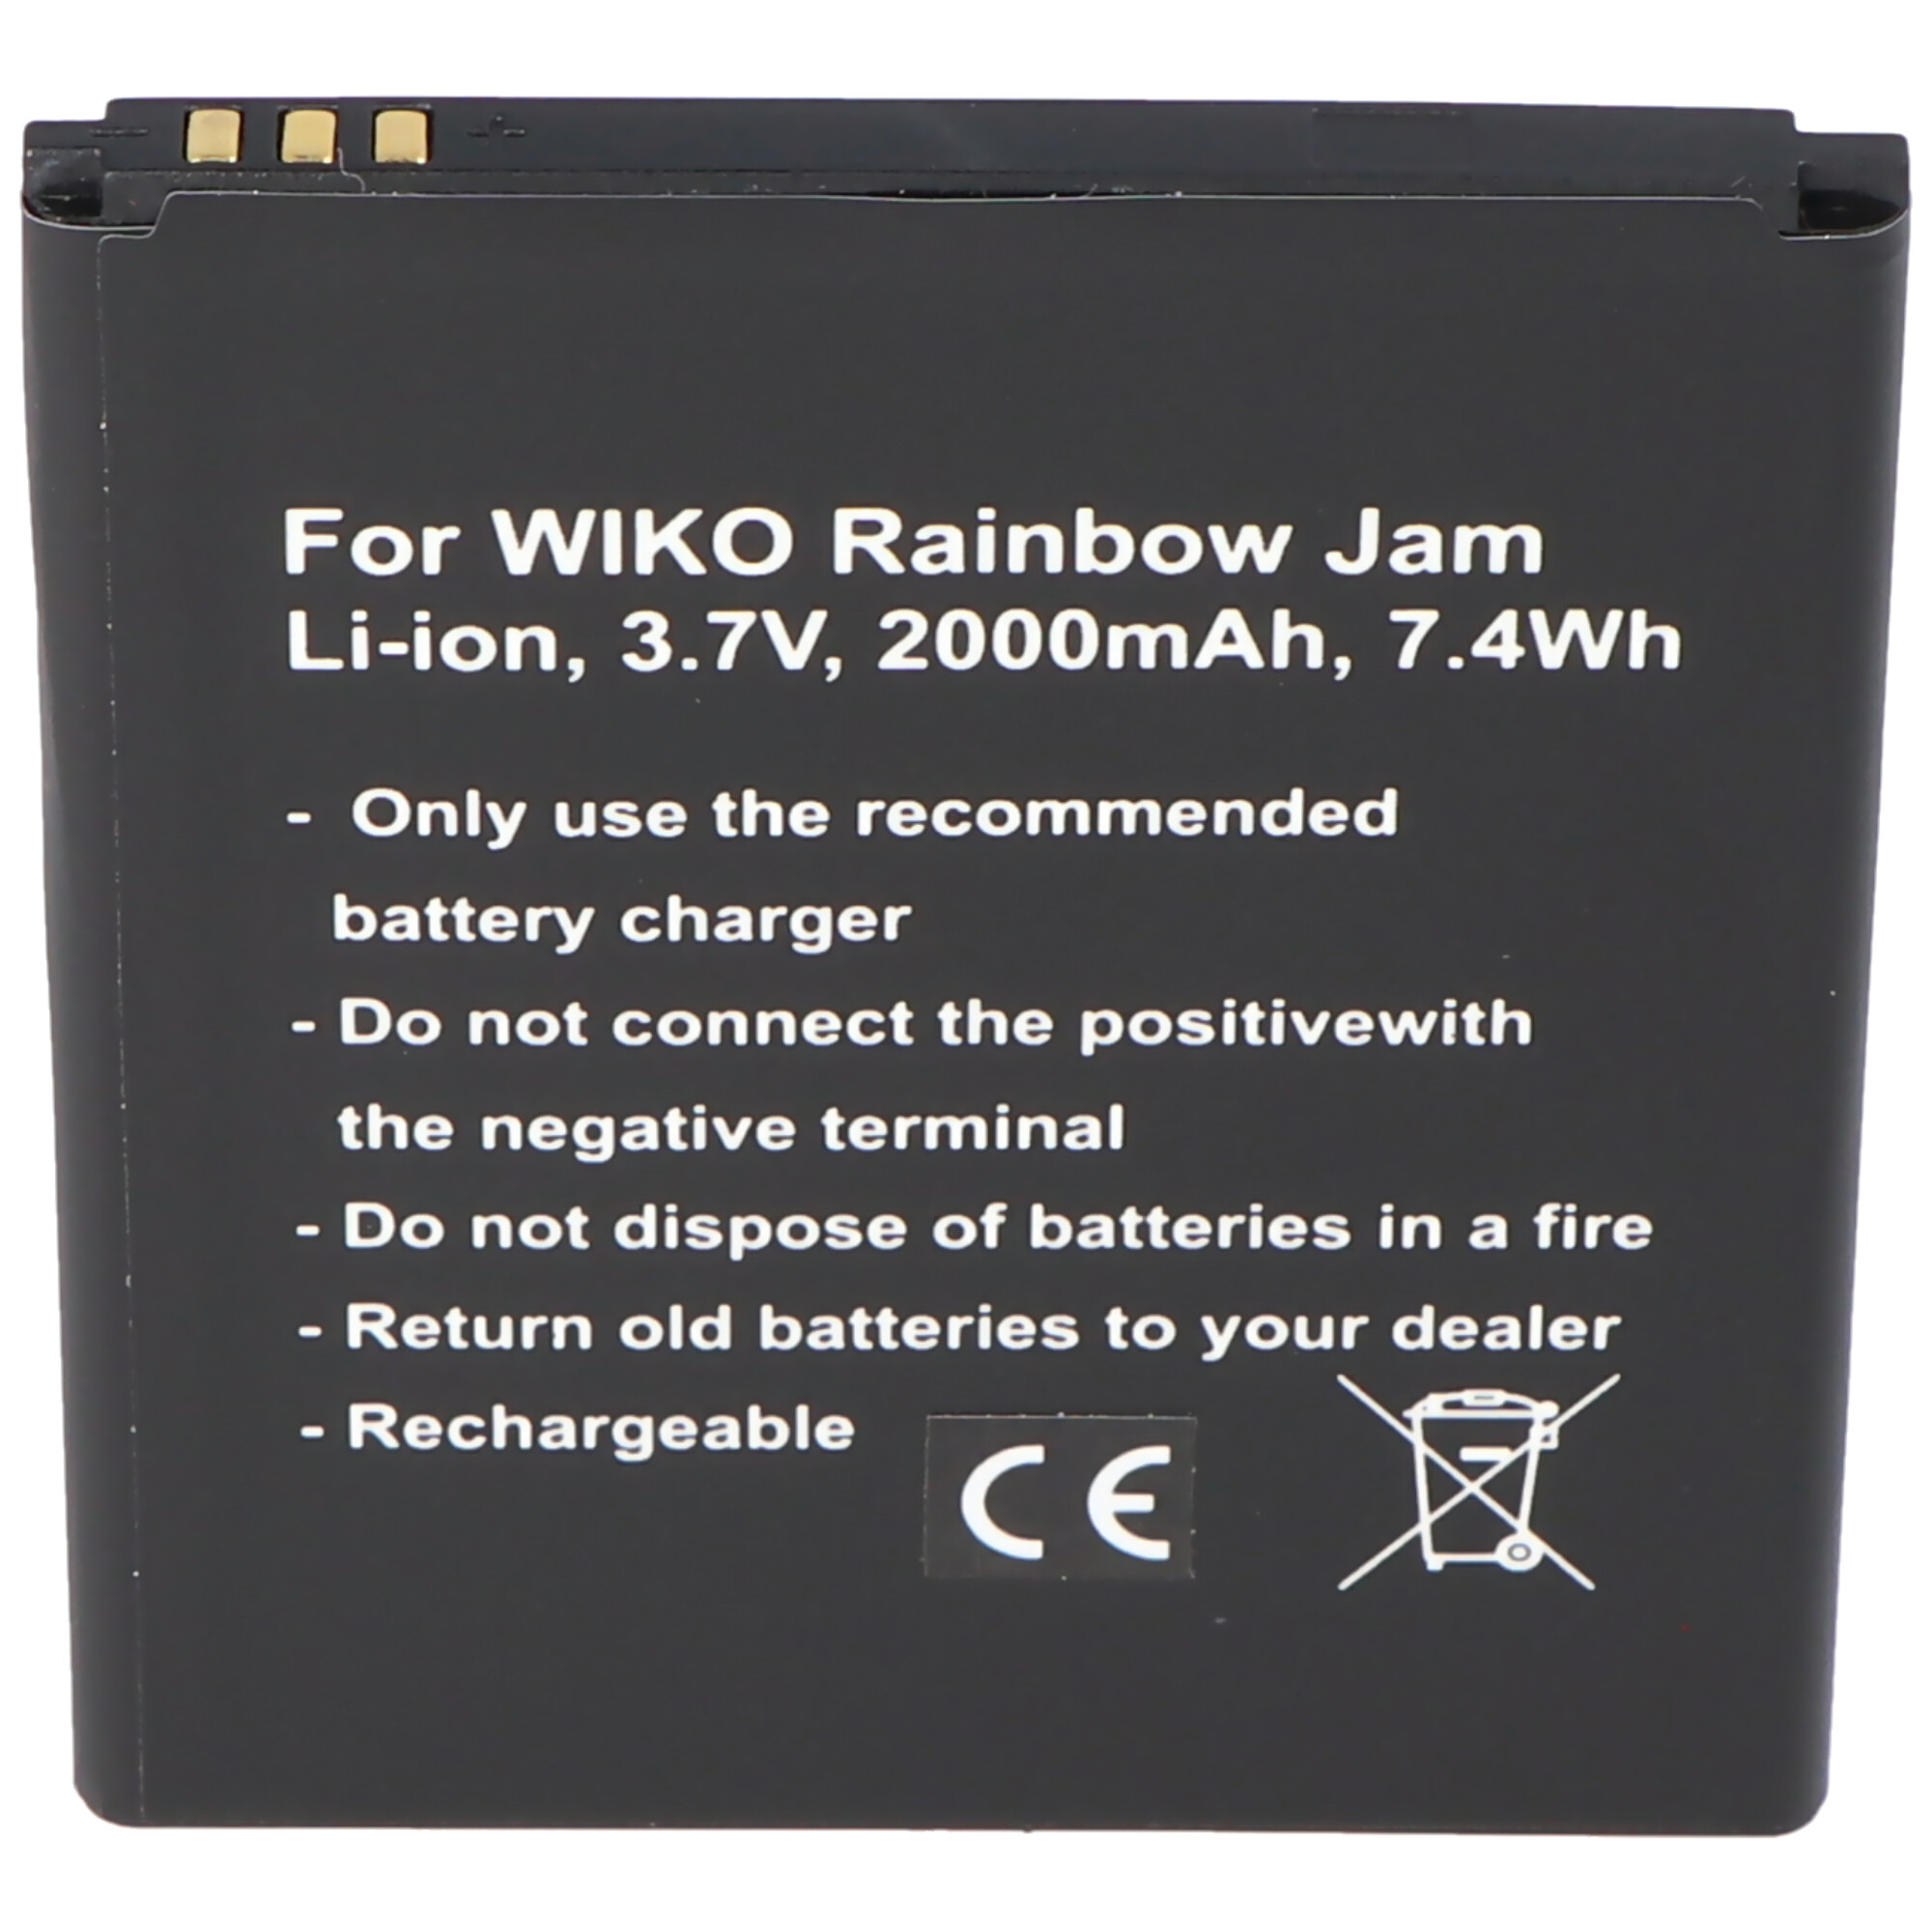 passend x Wiko 70,0 Rainbow 4,7mm Handy-Akku, Rainbow Akku 5222, Wiko Jam, 4G, Li-Ion Lithium-Ionen mAh Akku 60,2 x ACCUCELL für Jam - 2000